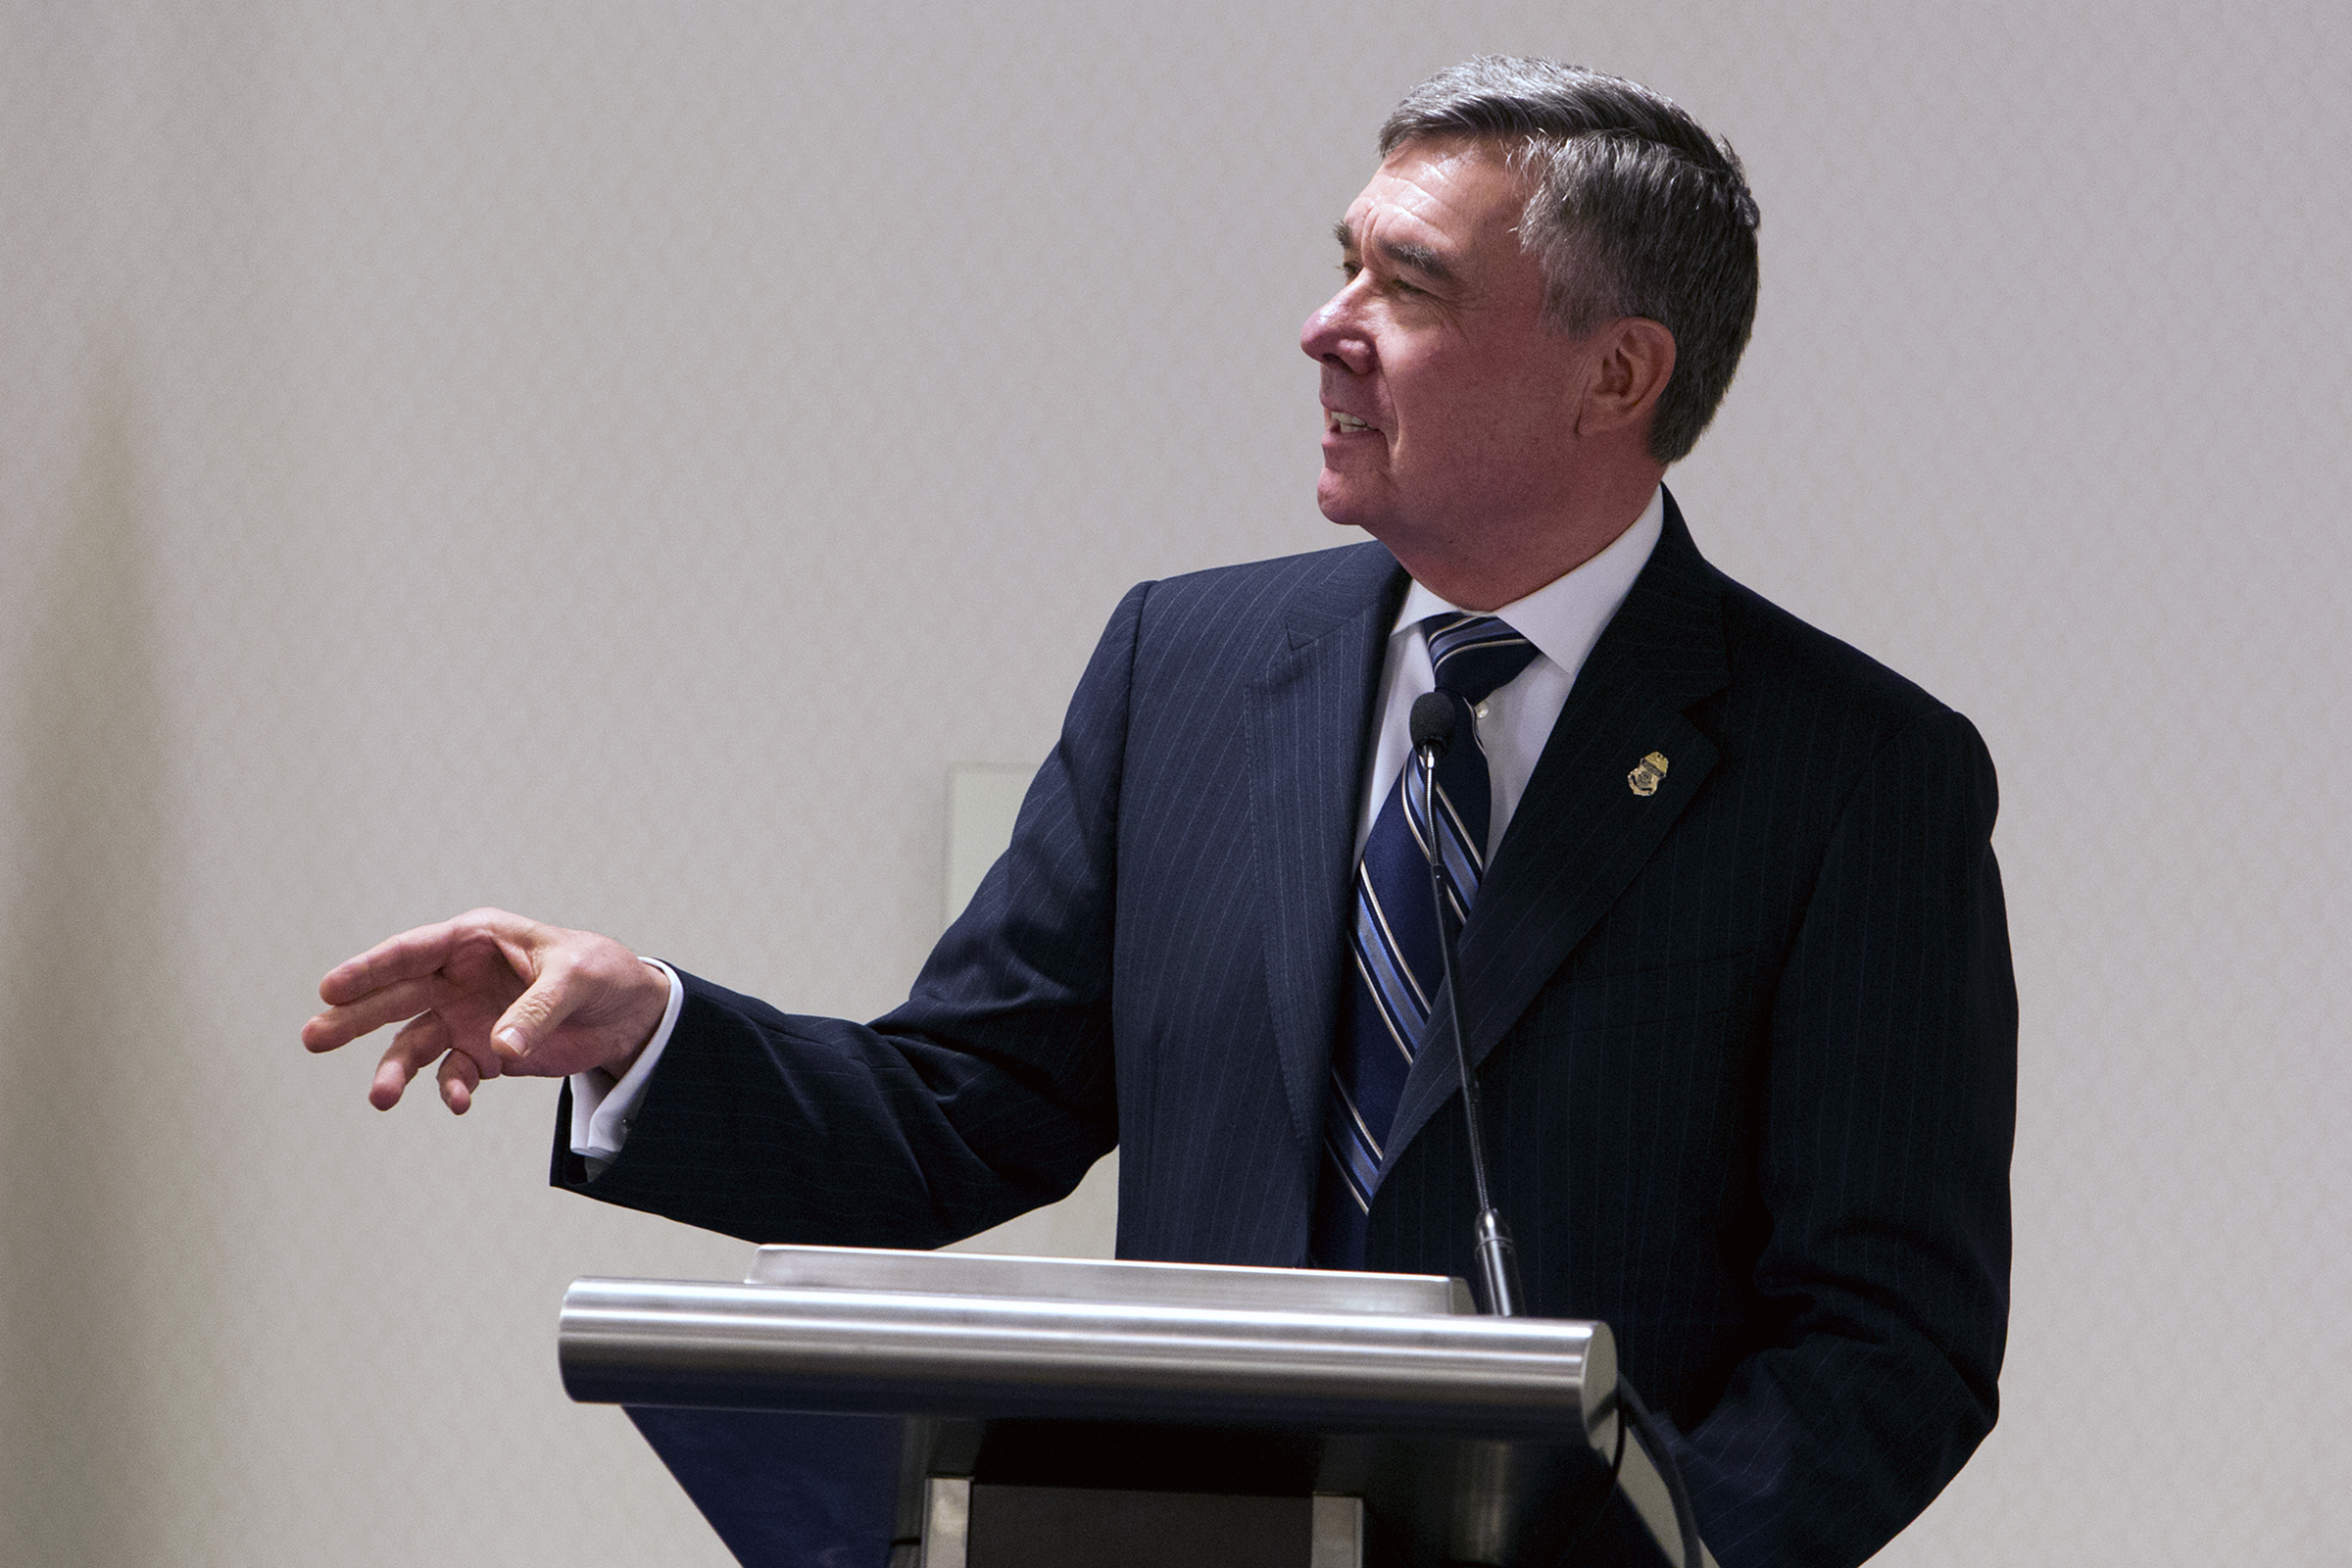 Photo of Kerlikowske addressing the audience at the March 2014 East Coast Trade Symposium in Washington, D.C.